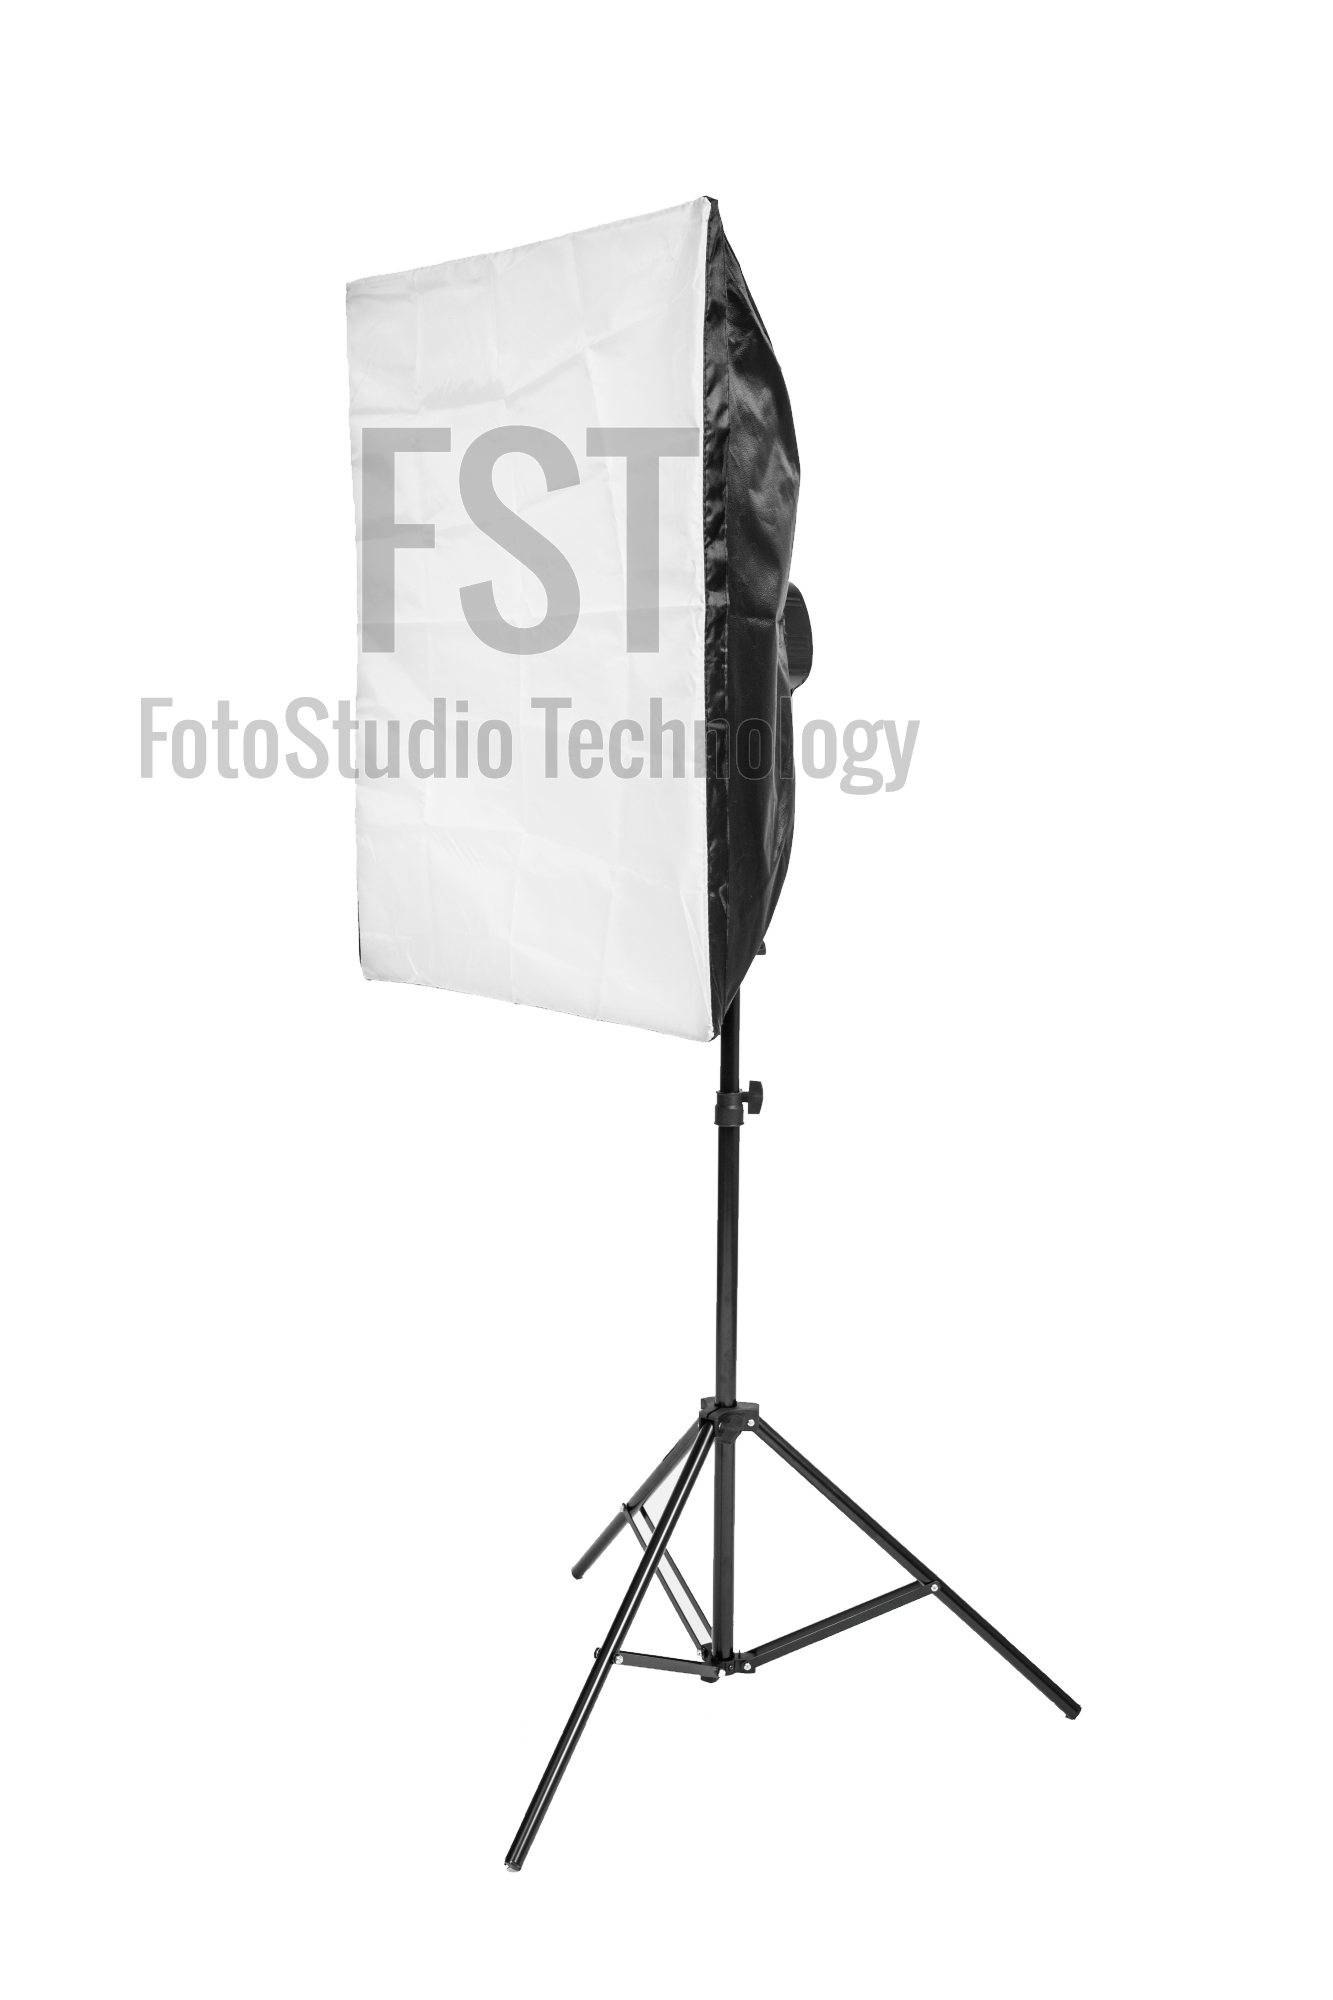 Комплект импульсного света FST E-180 Softbox Kit + радиосинхронизатор FST VC-604DC в подарок!